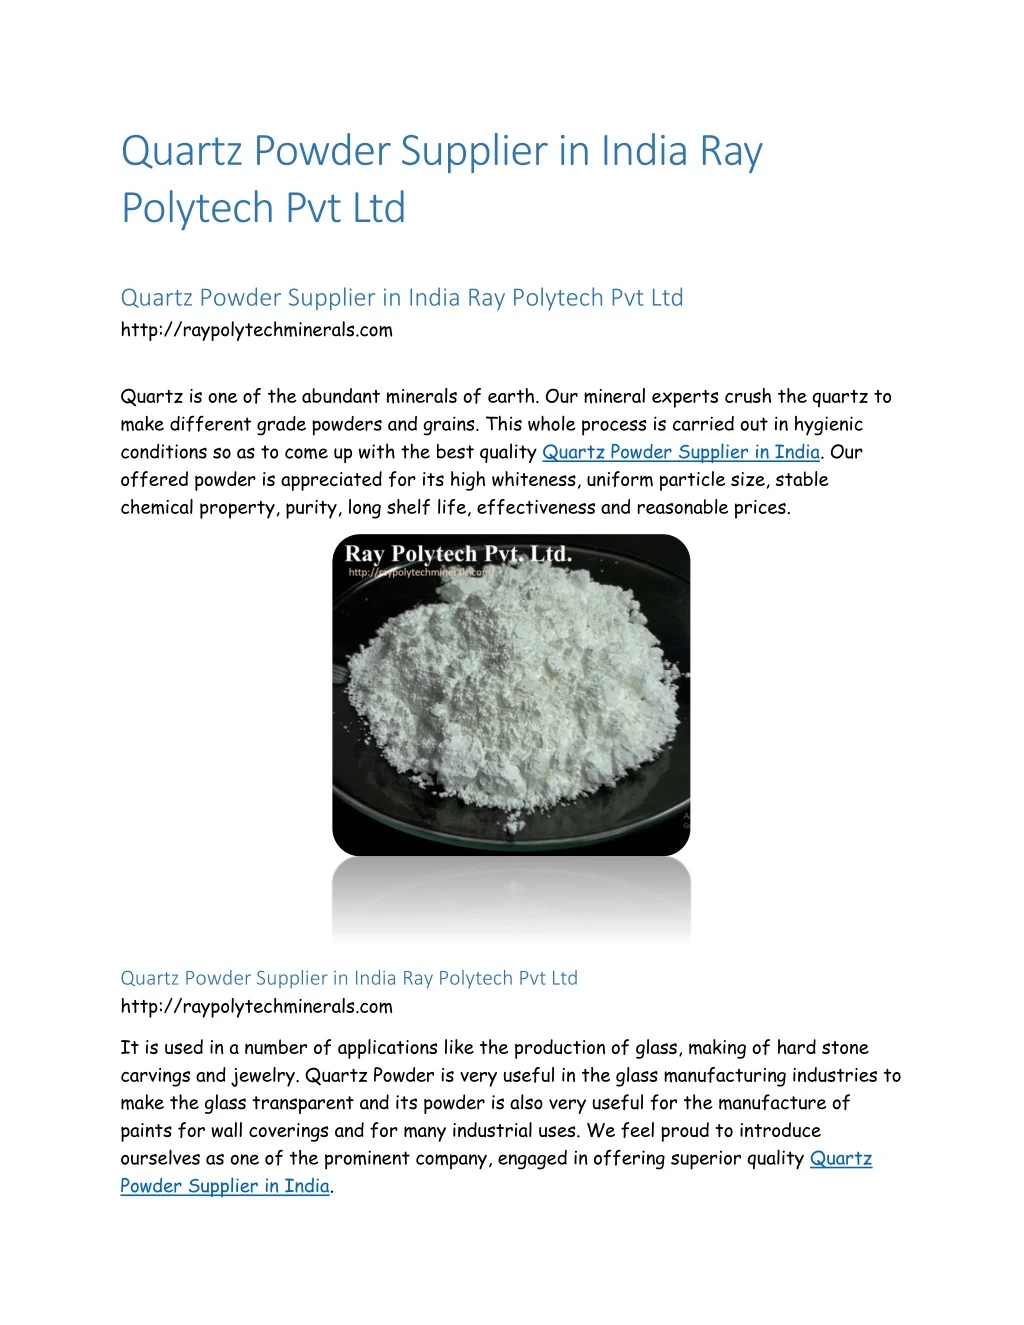 quartz powder supplier in india ray polytech